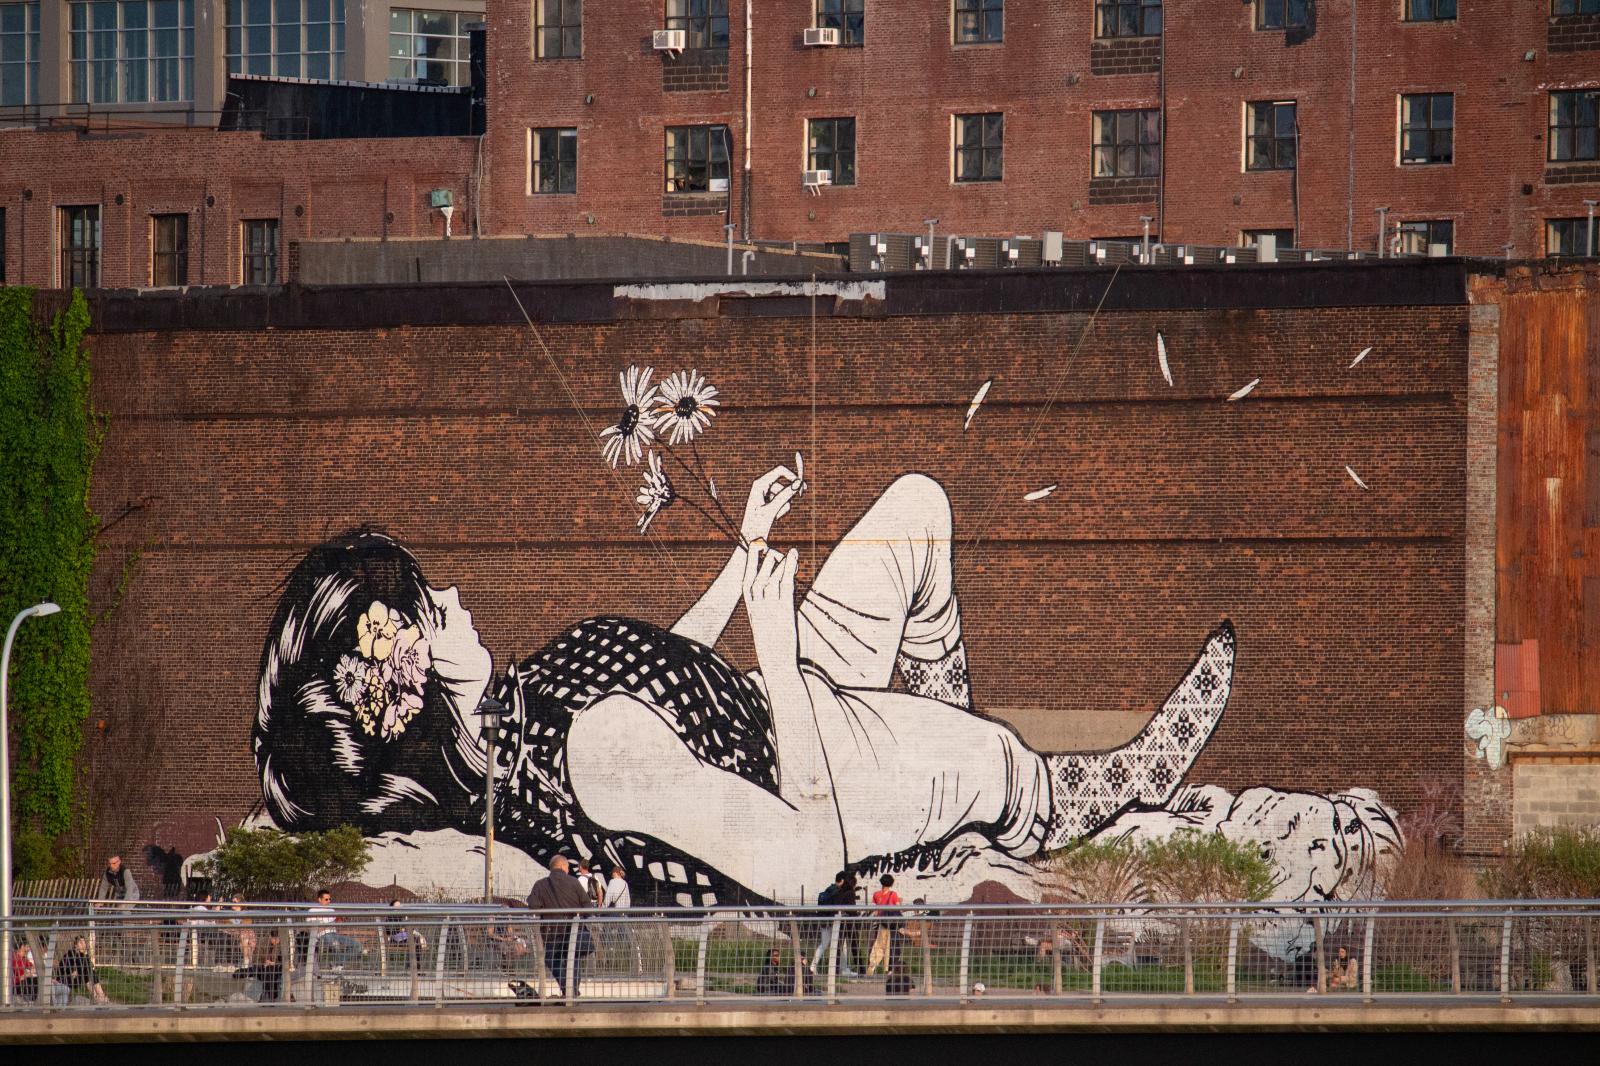 Brooklyn Mural | Buy this image